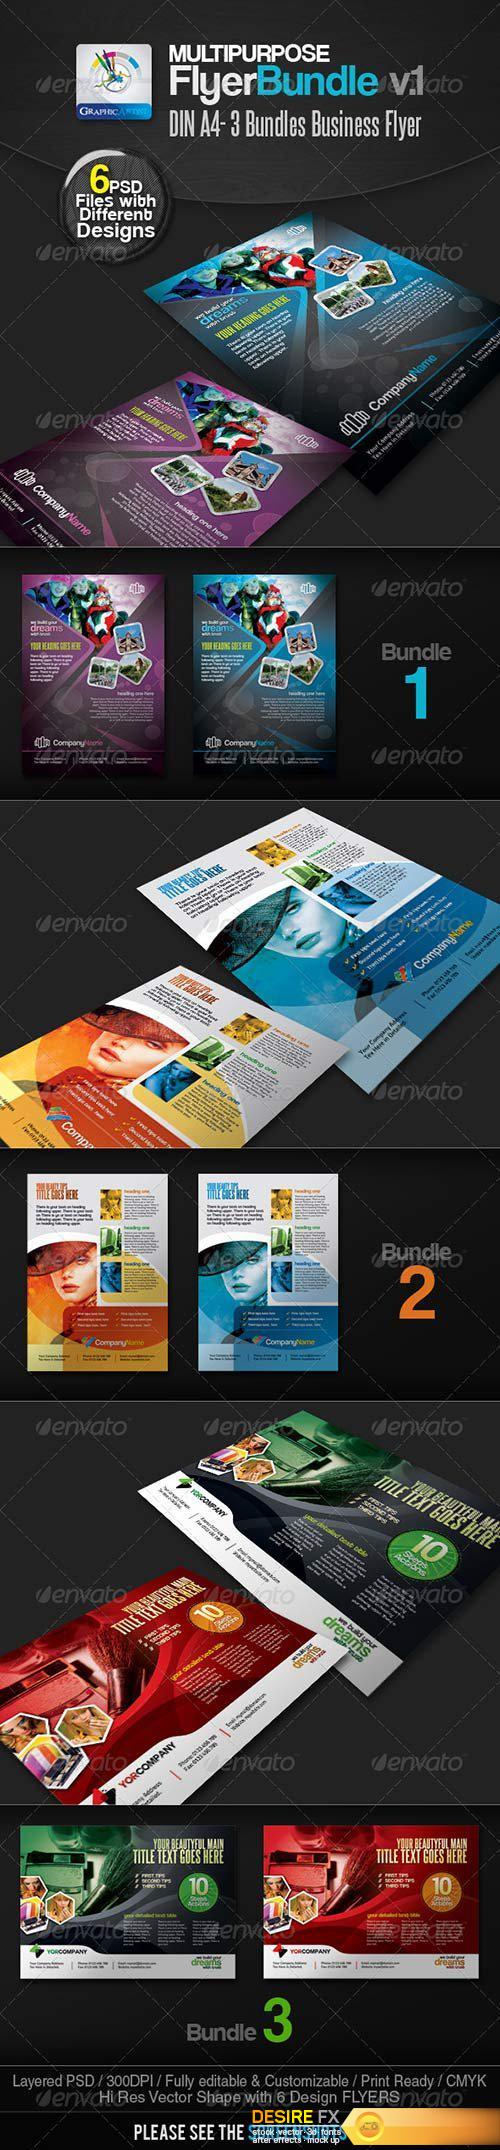 Graphicriver - Multipurpose Business Flyer Pack v.1 2502513